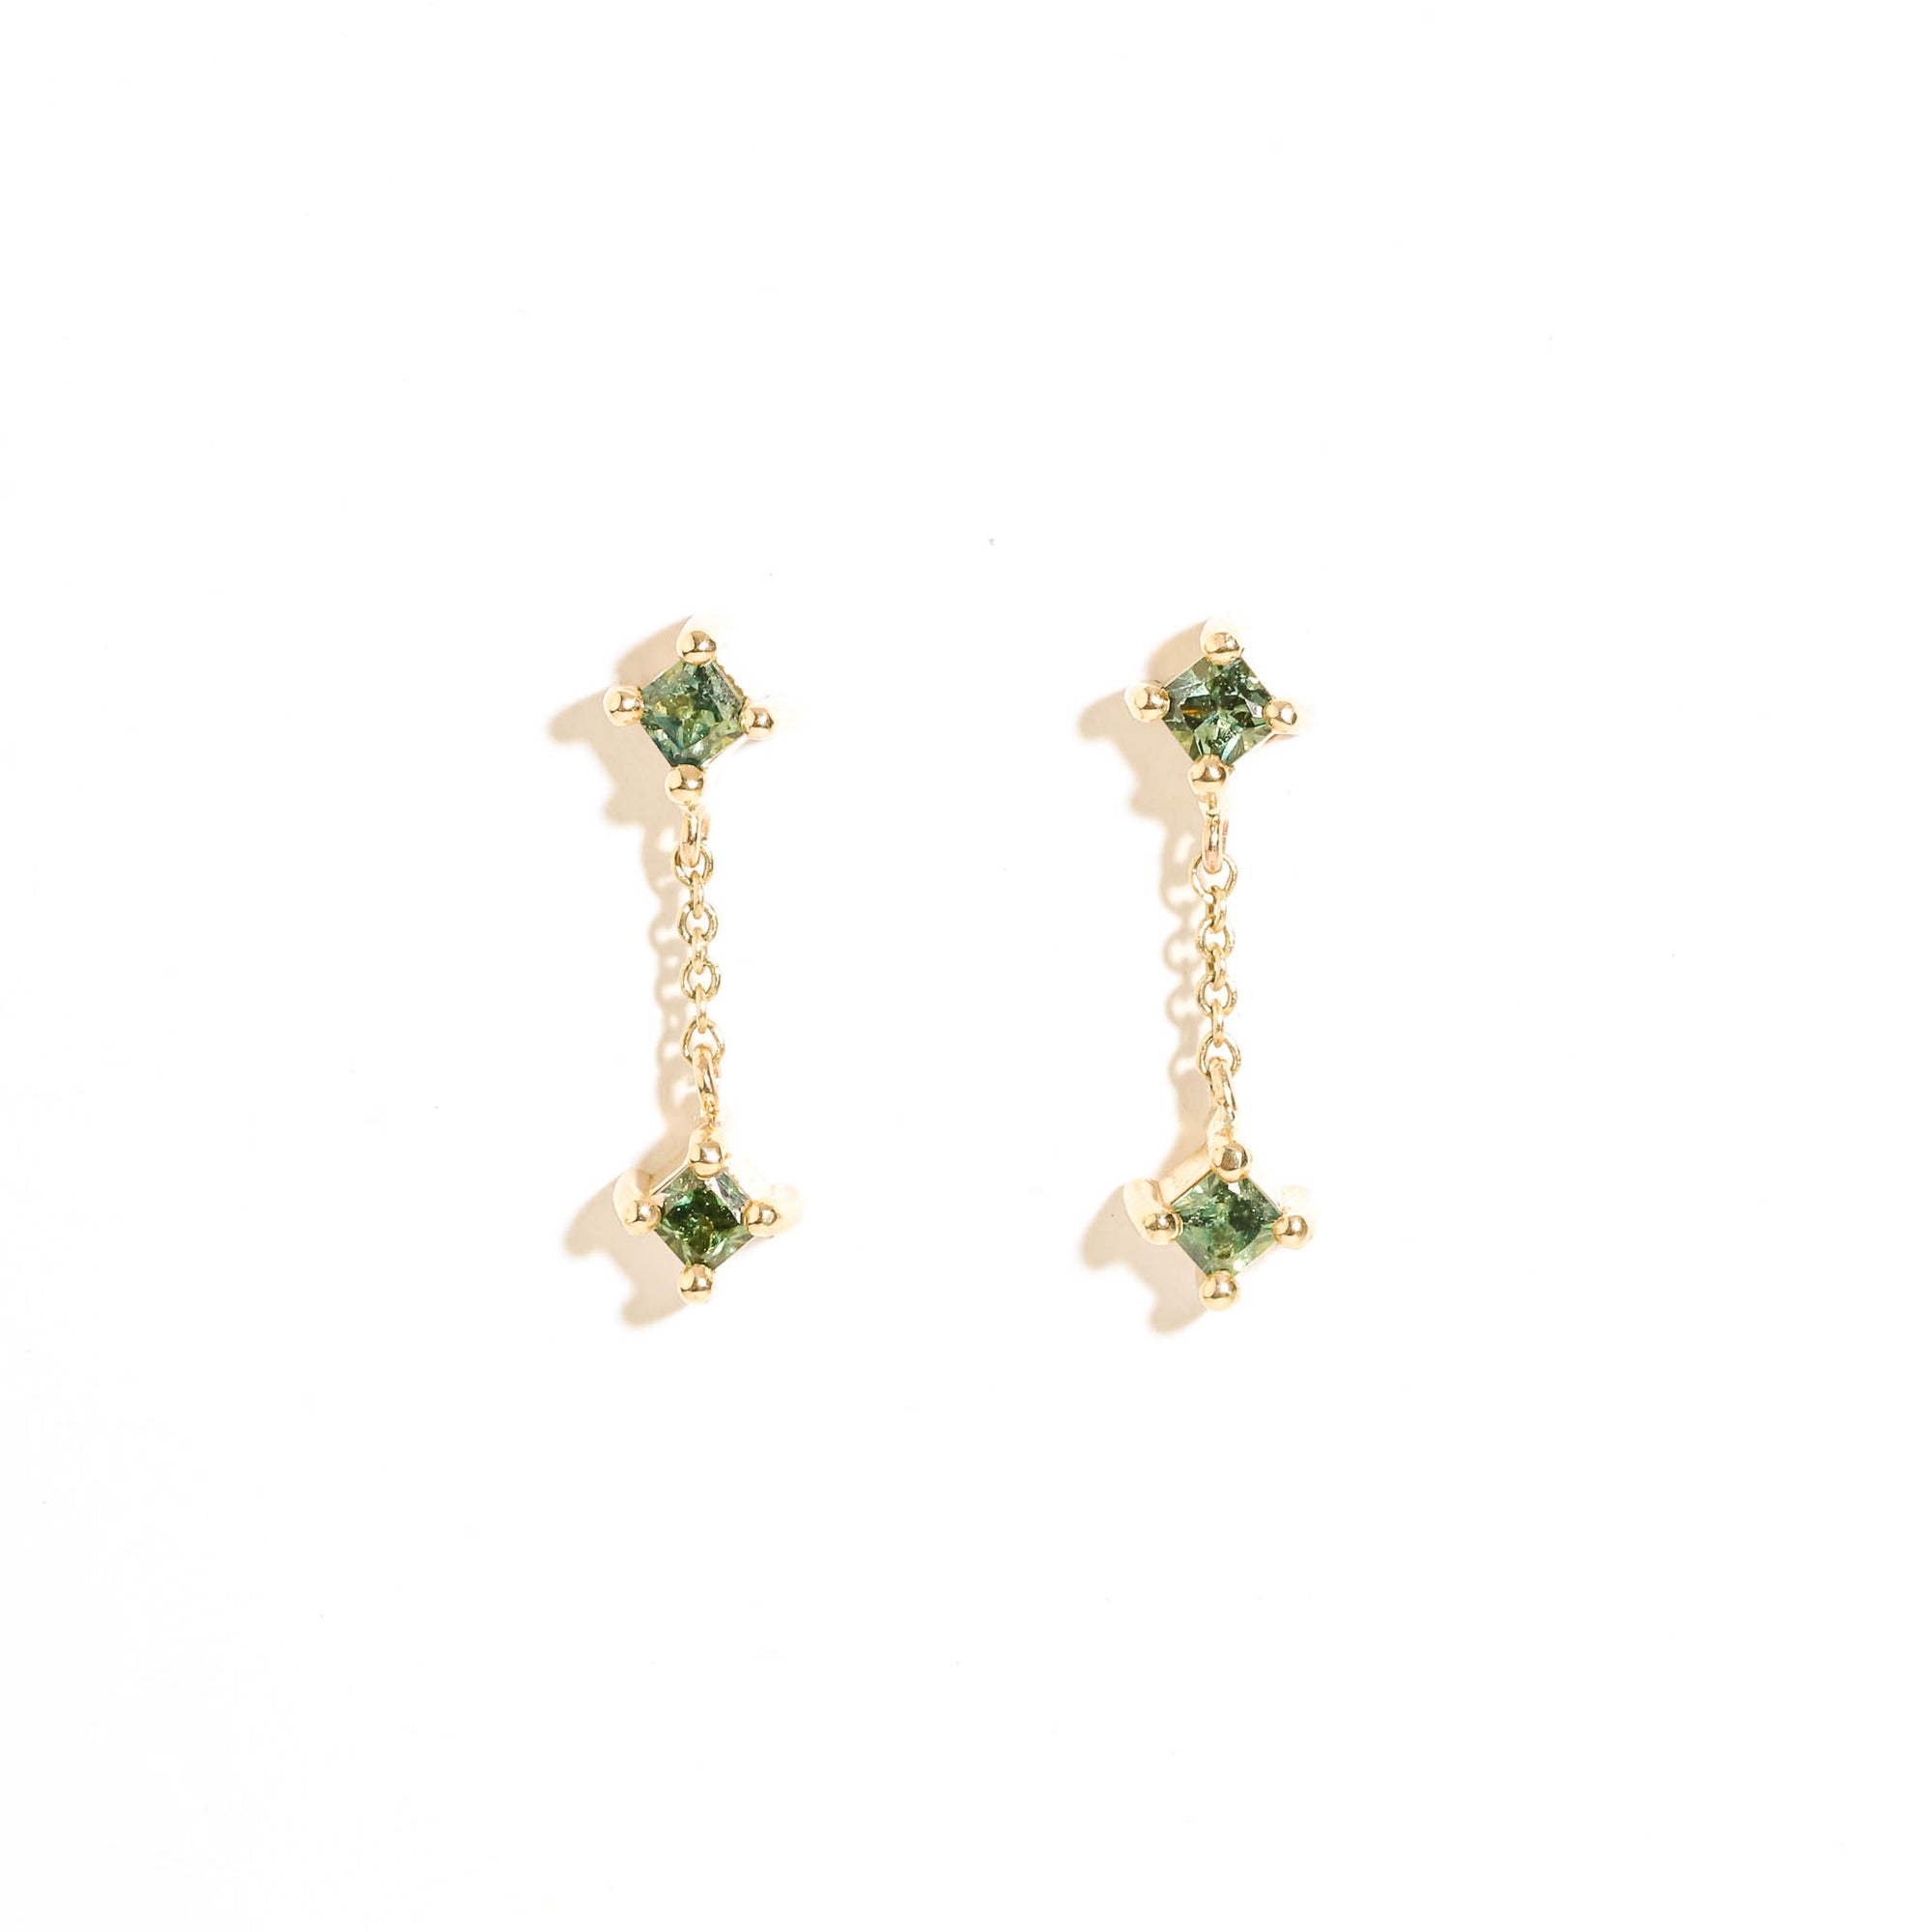 Princess Cut Green Sapphire Drop Earrings with 9 Carat Yellow Gold Chain